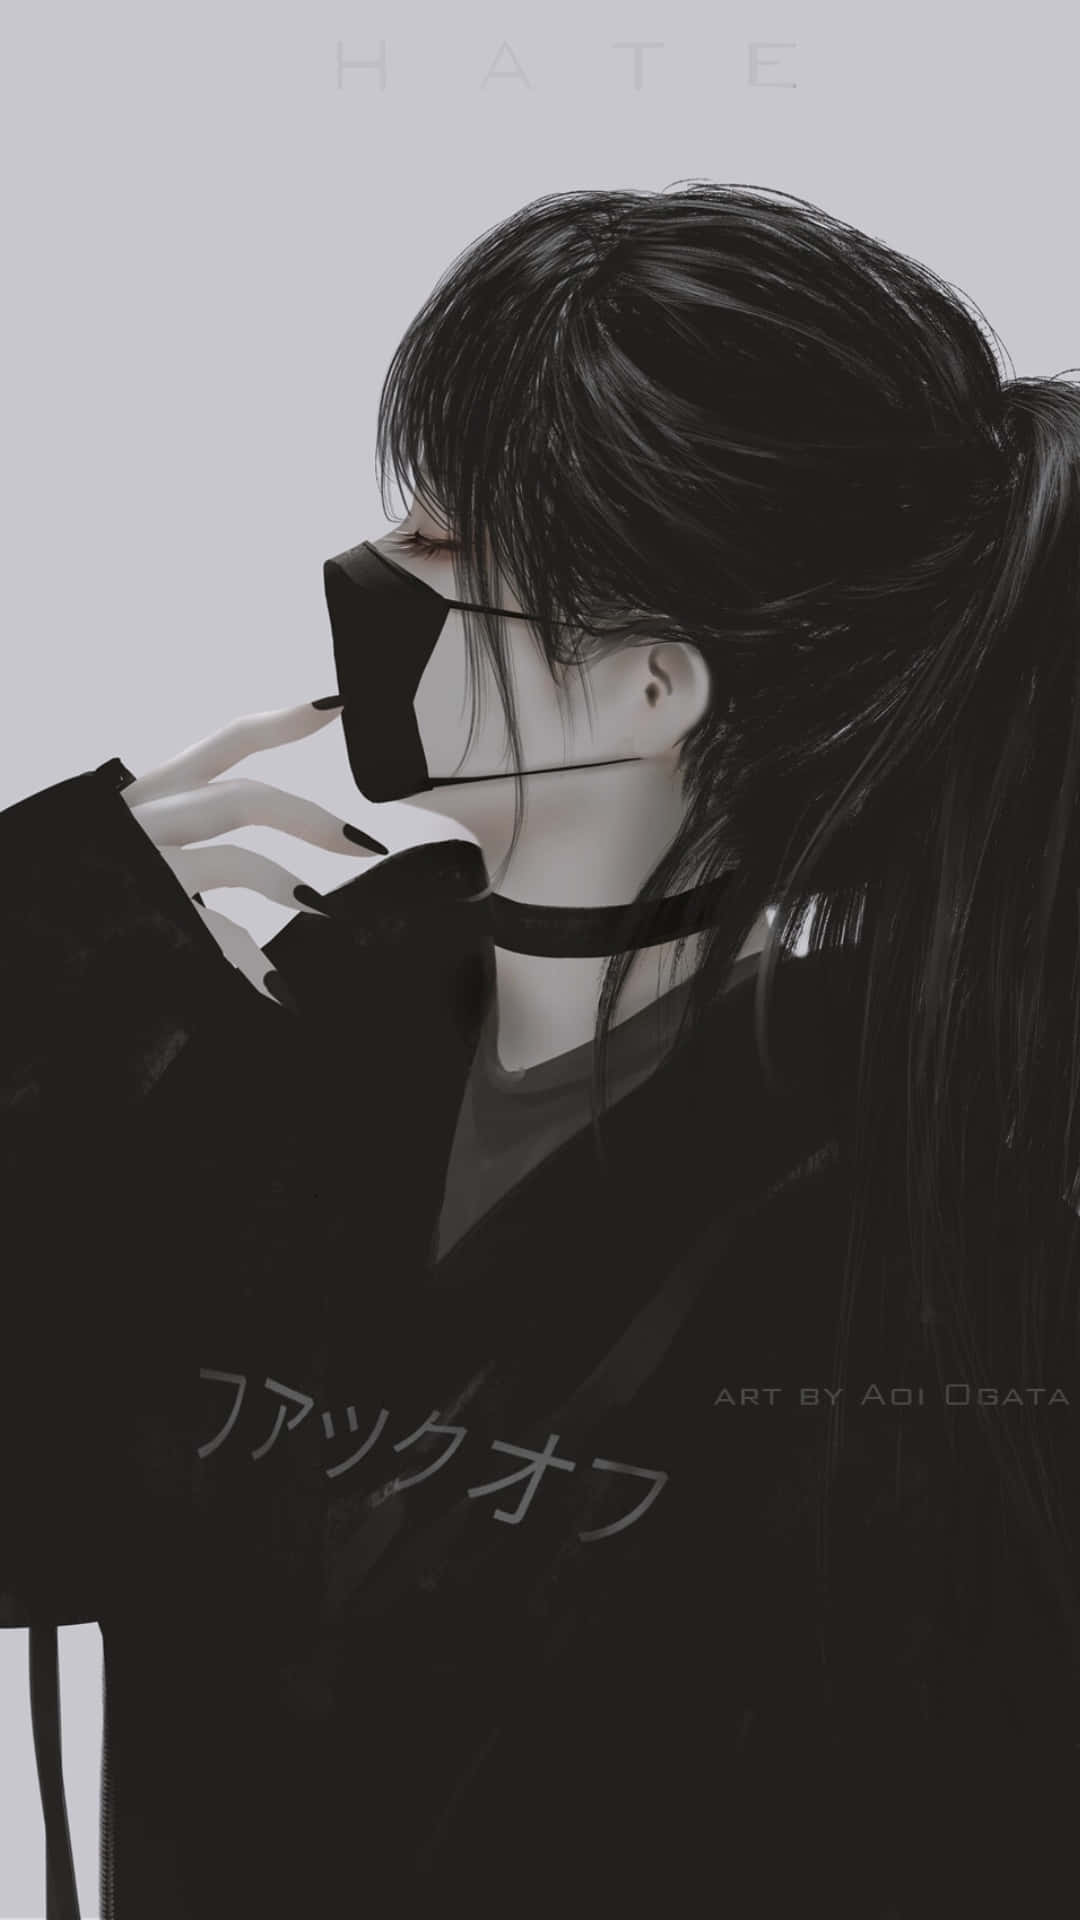 Animemädchen Profilbild Maske Wallpaper